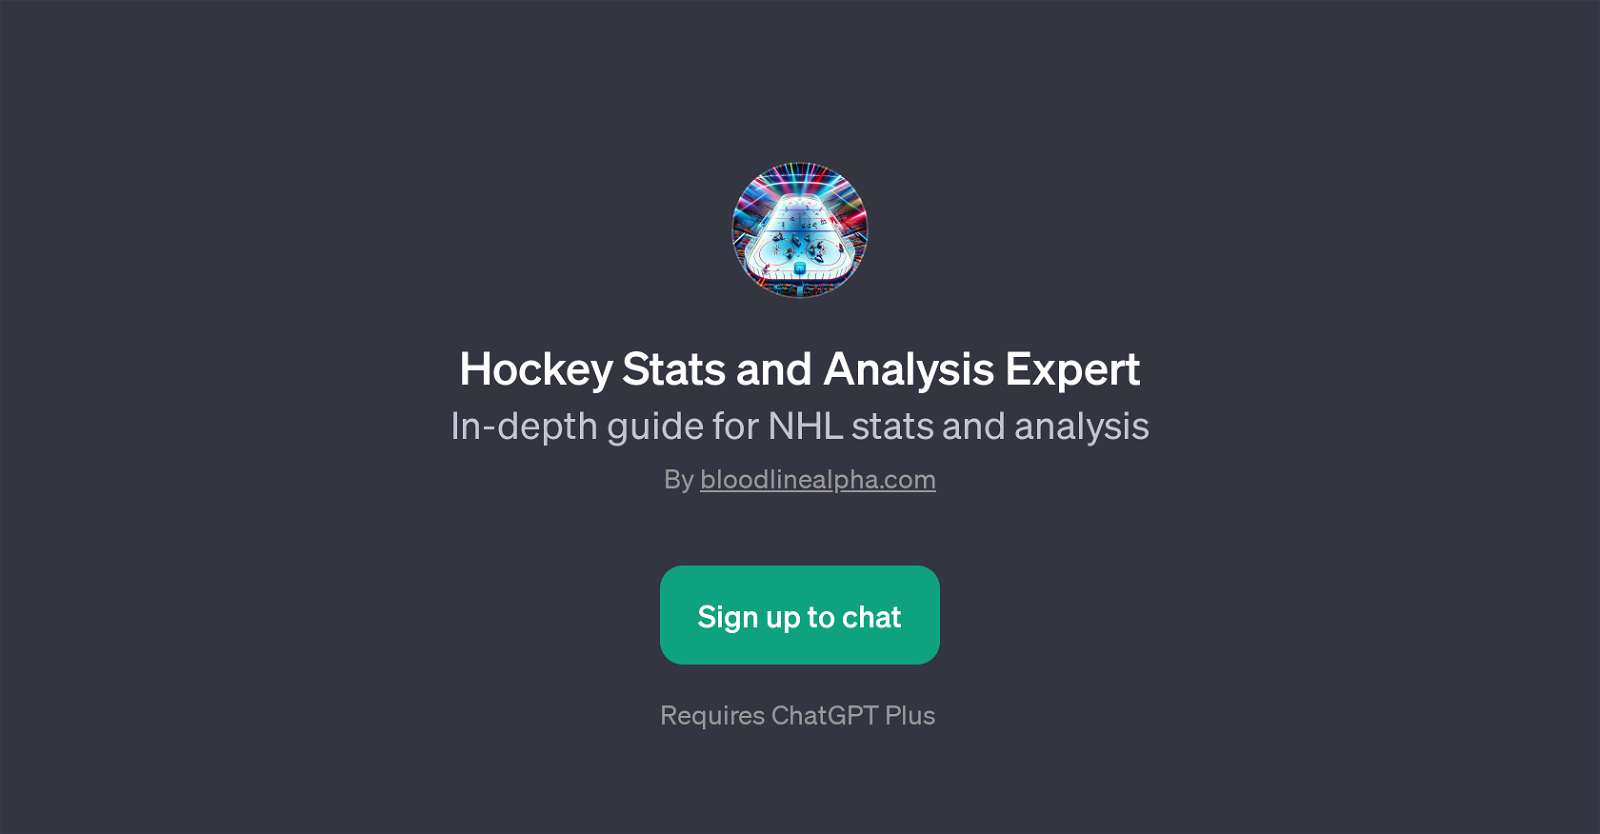 Hockey Stats and Analysis Expert website